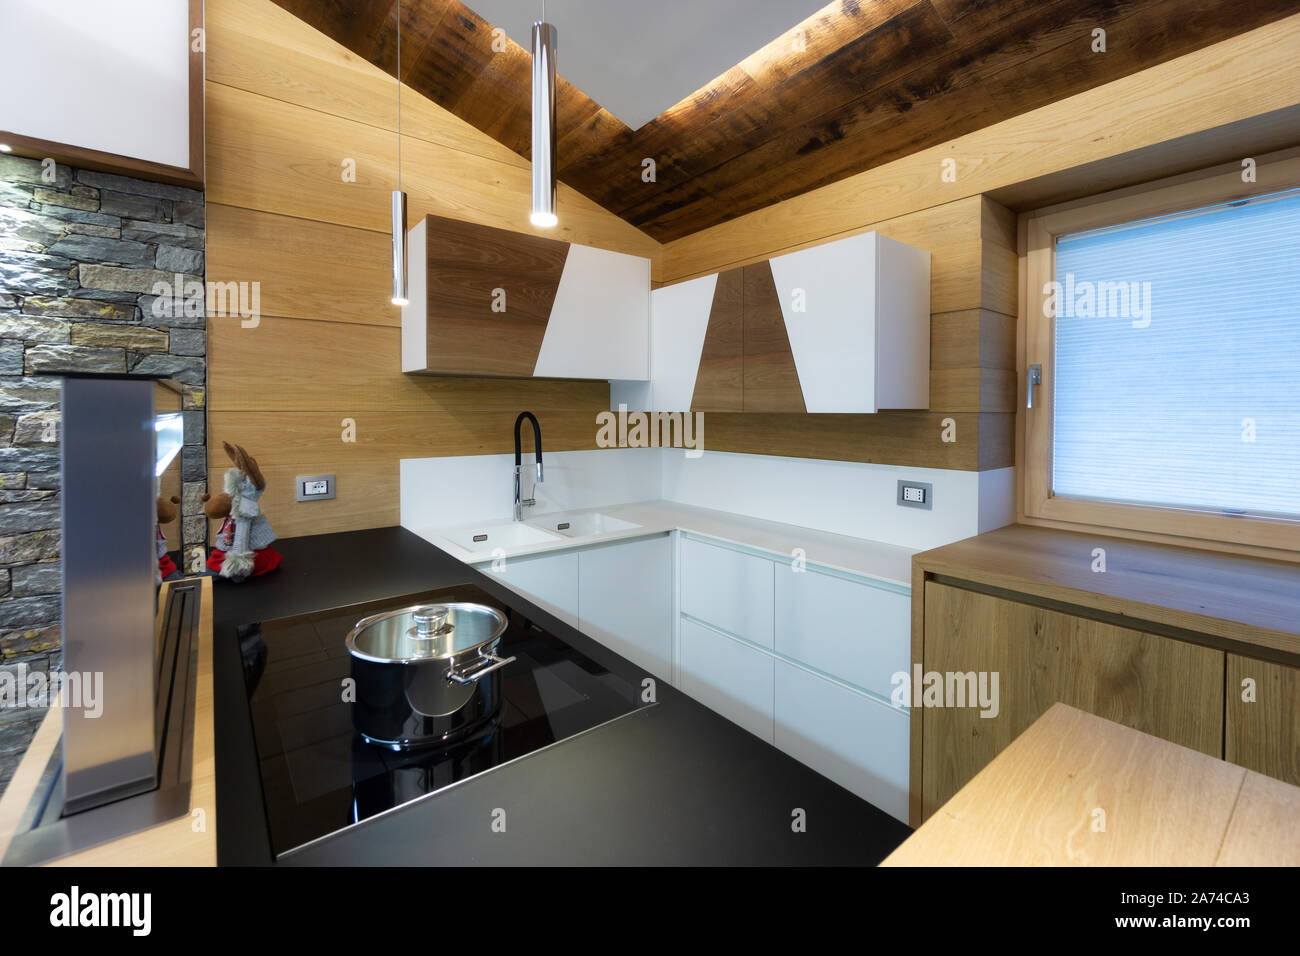 Wood kitchen interior in modern style Stock Photo